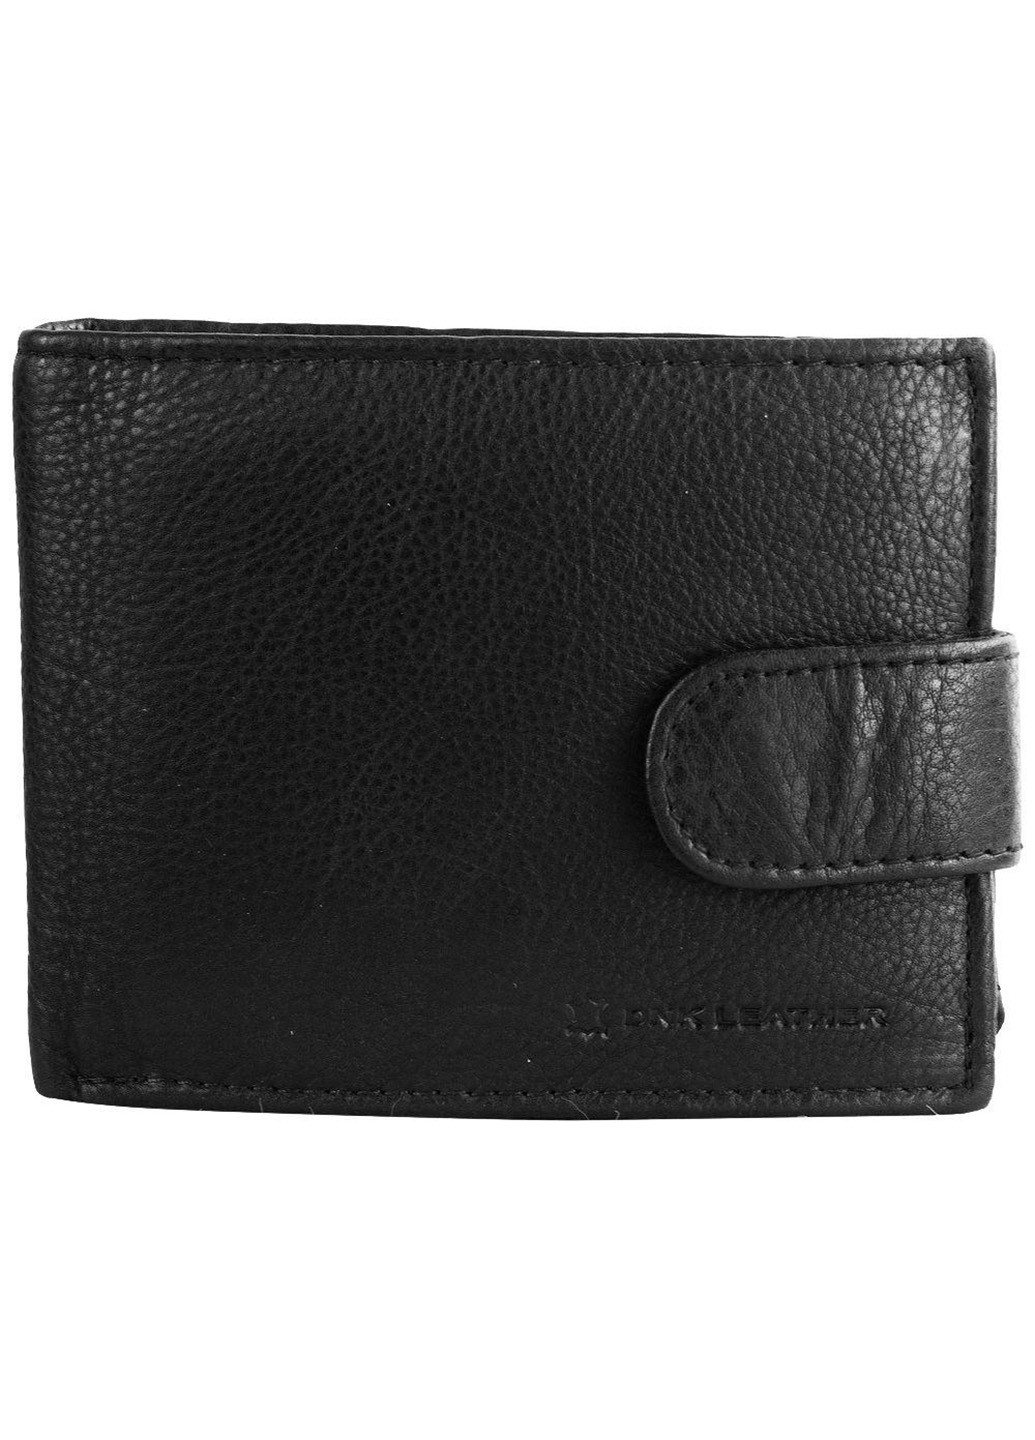 Мужской кожаный кошелек 11х8,5х2,5 см DNK Leather (216146351)